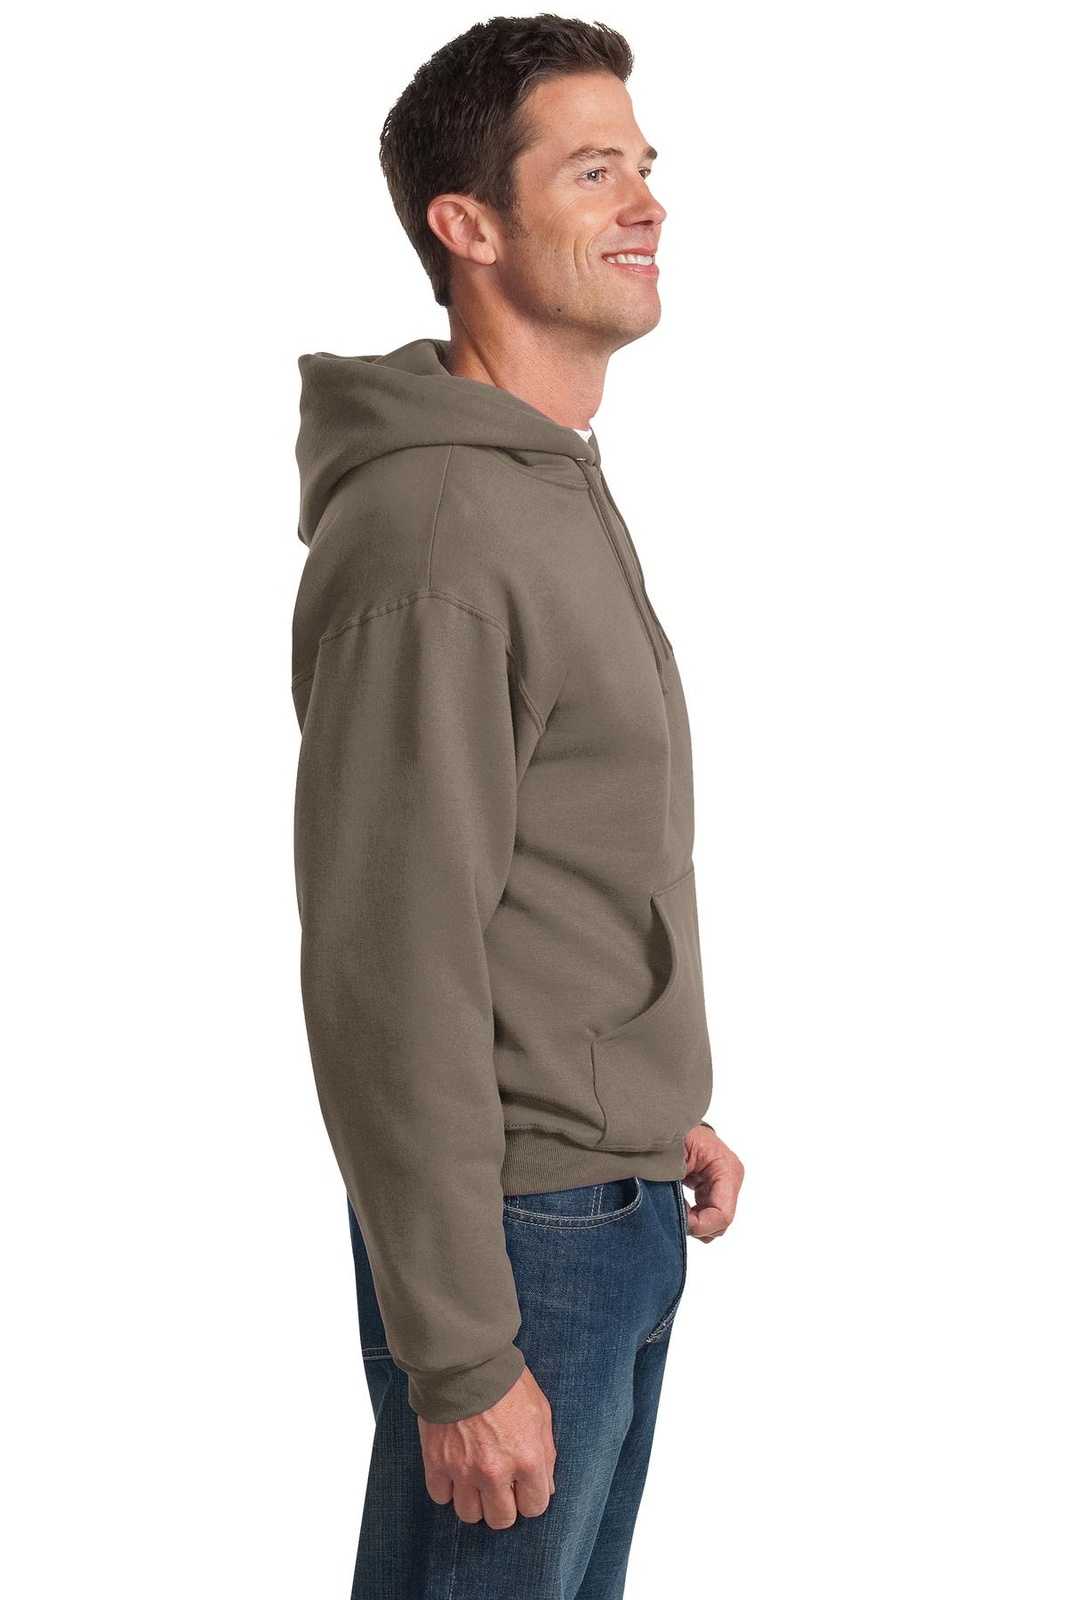 Jerzees 996MR NuBlend Pullover Hooded Sweatshirt - Safari - HIT a Double